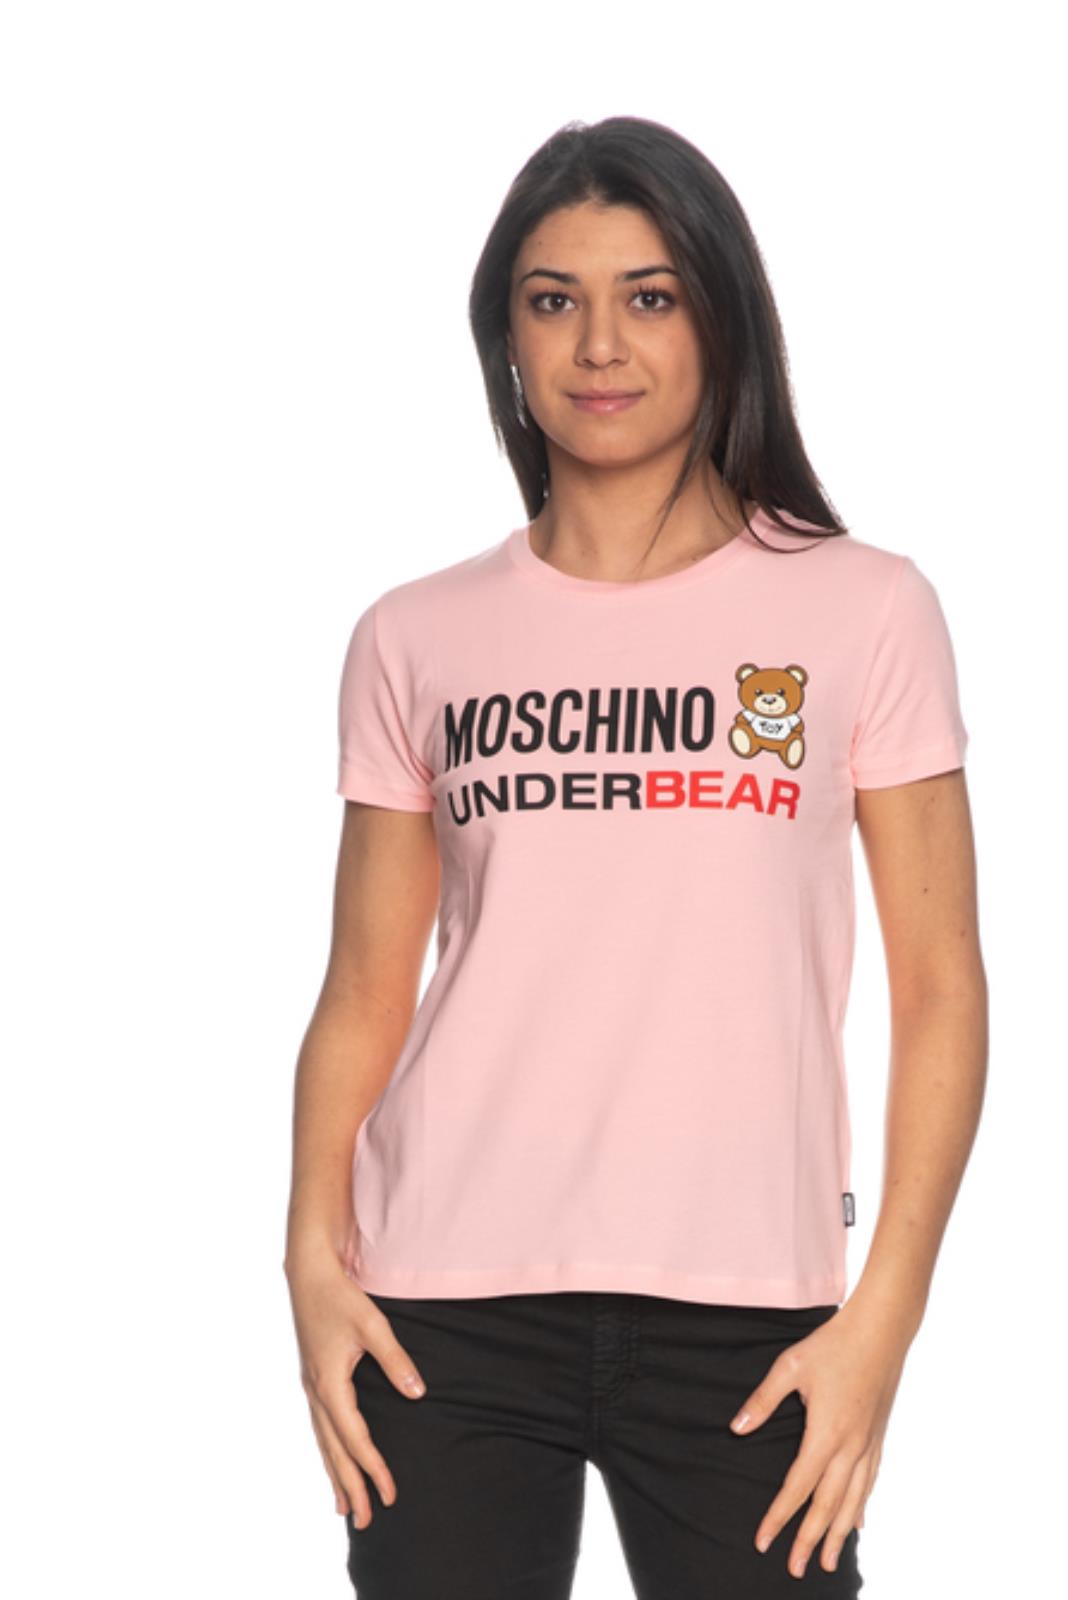 T-shirt Moschino underbear